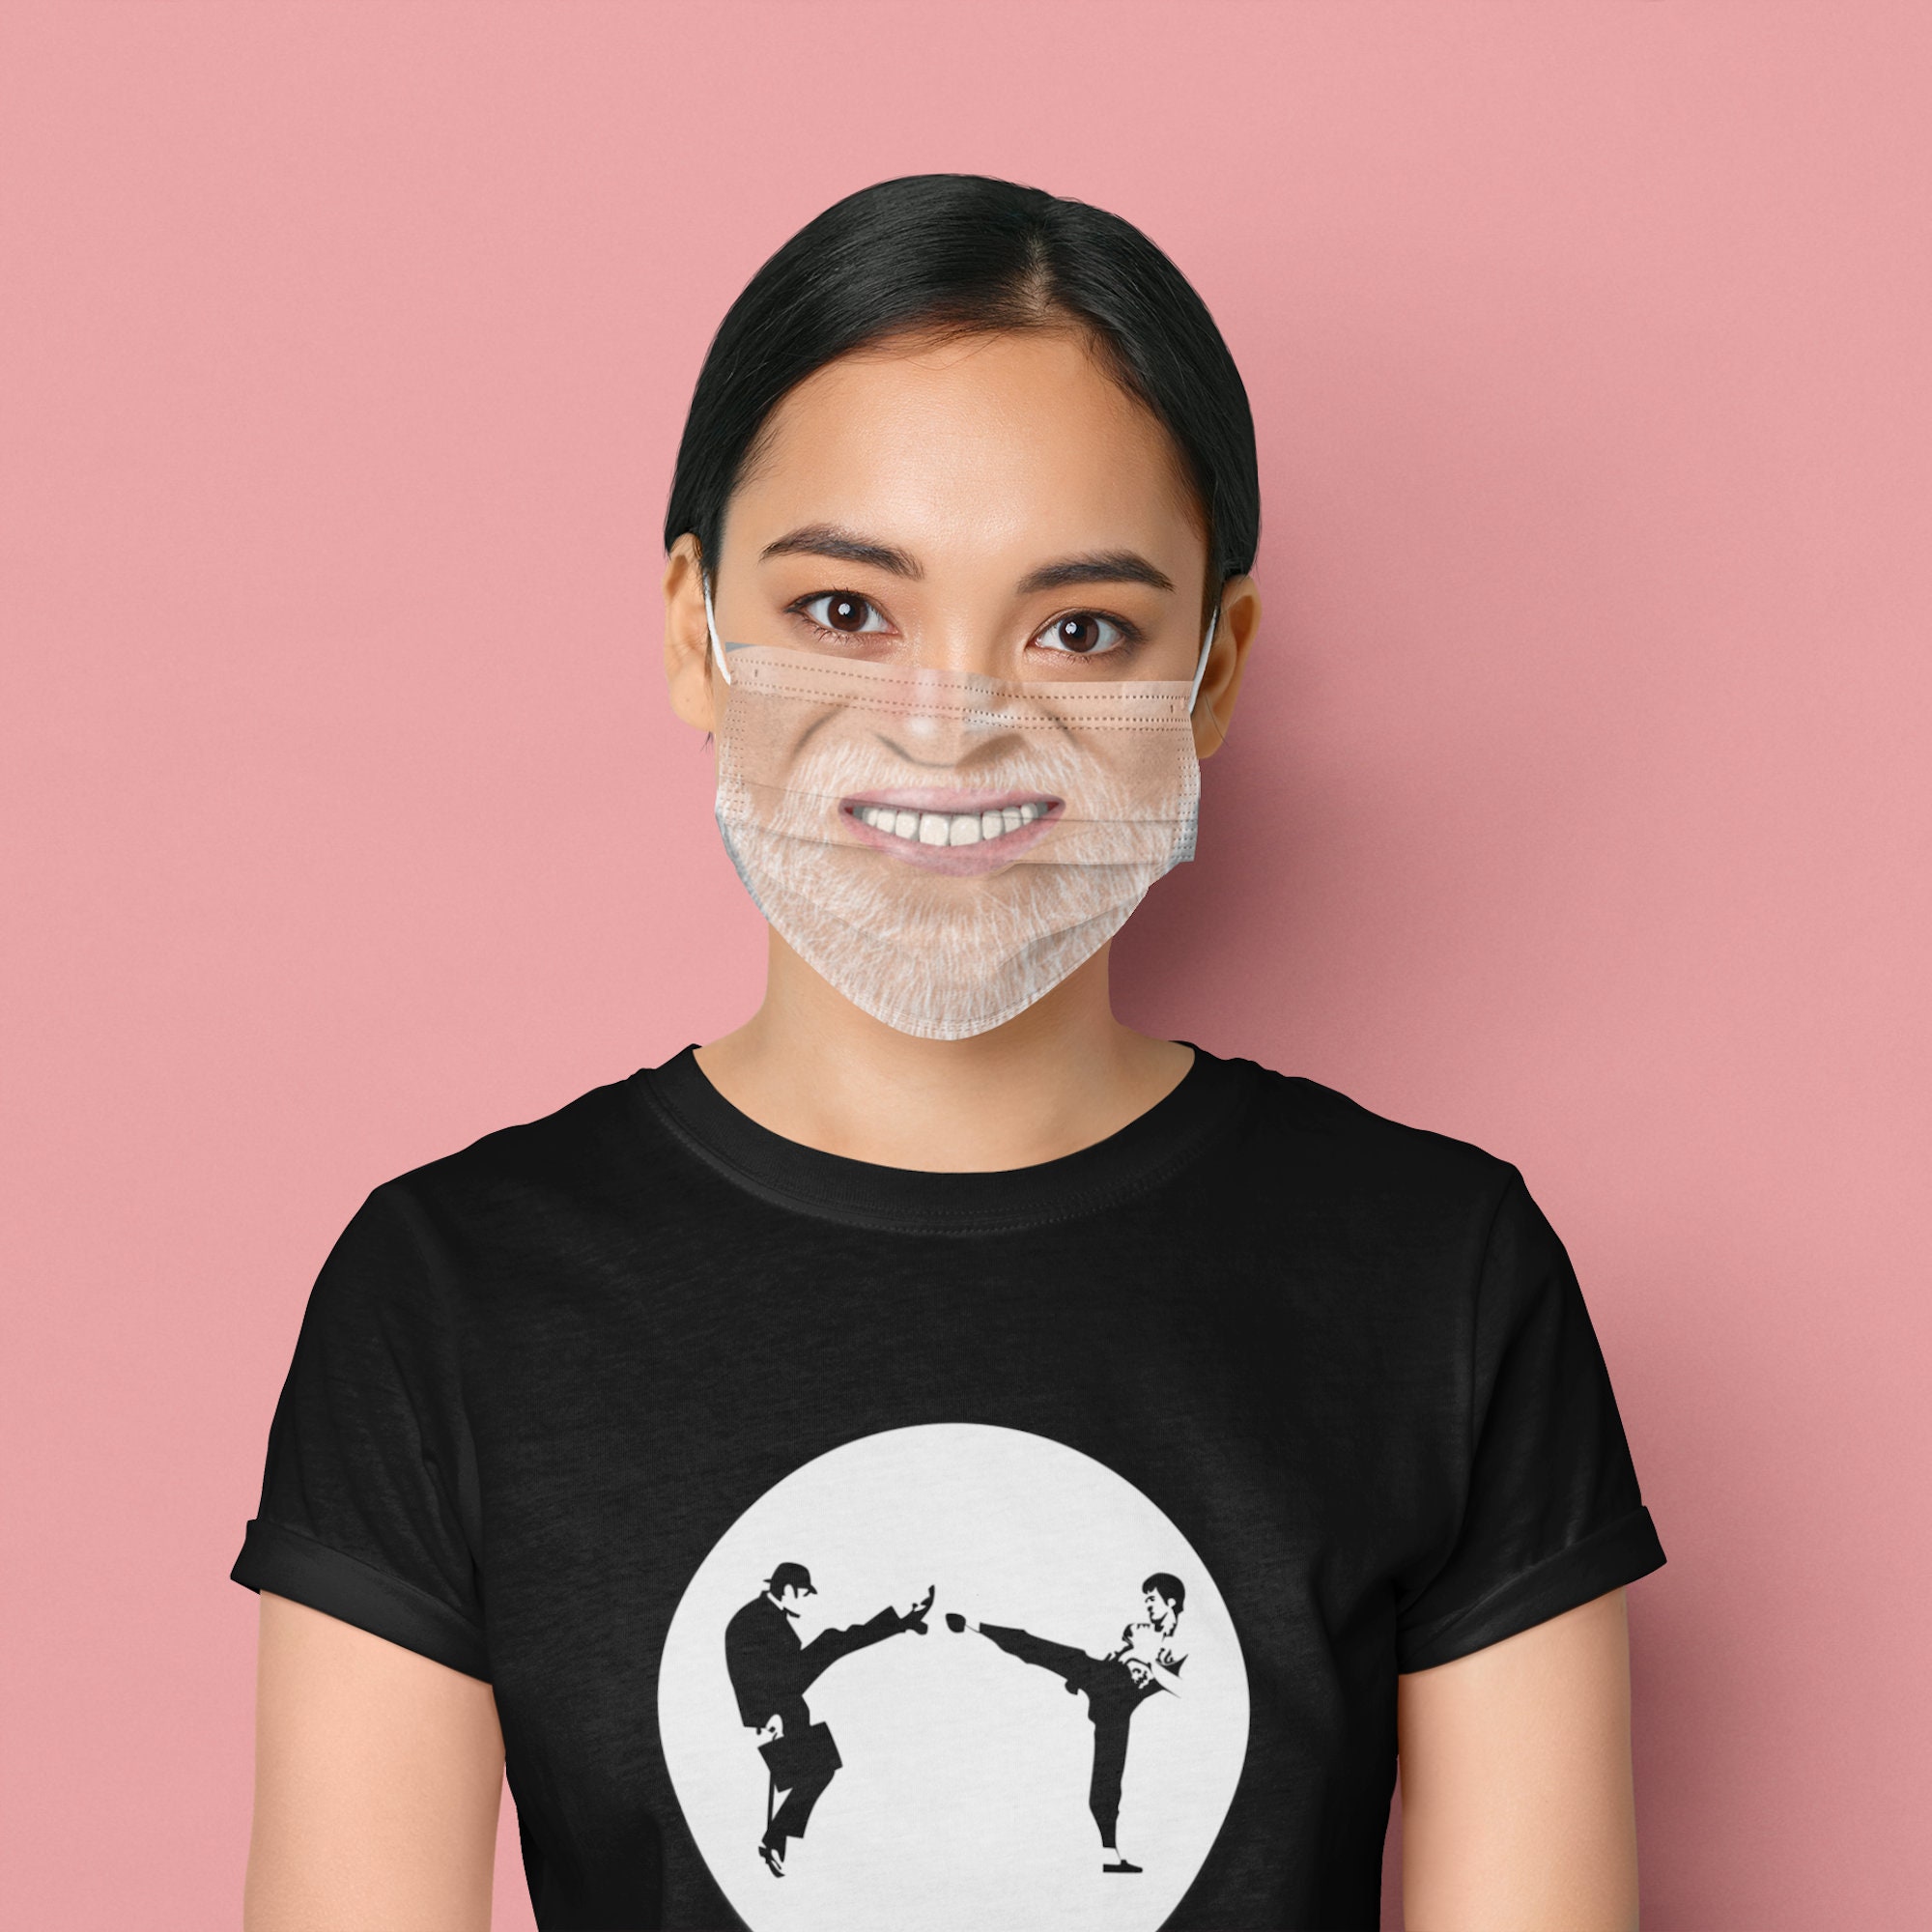 TheFabulous3Sisters…Designer Inspired Face Masks! – Not tonight, I'm ing